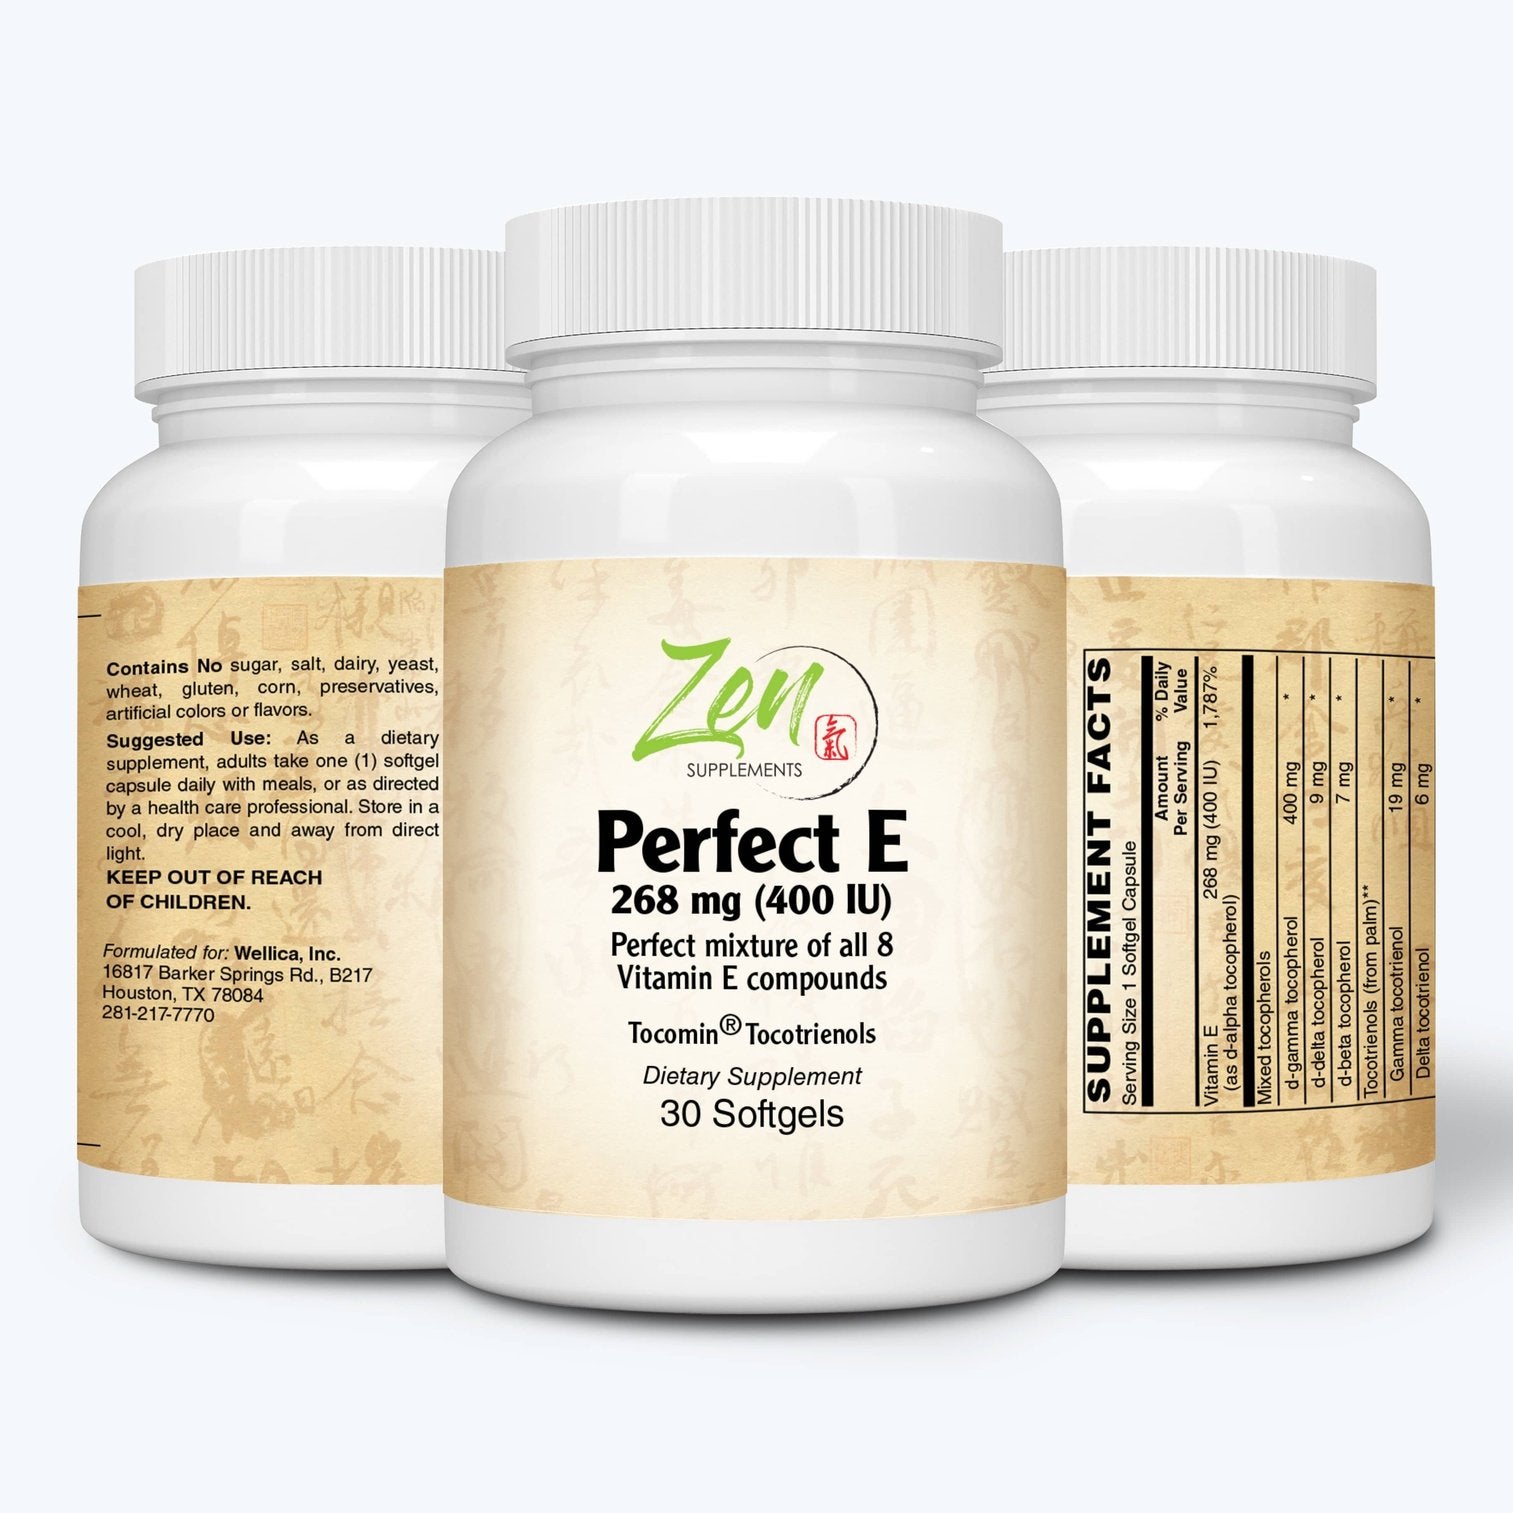 Zen Supplements - Perfect E with Tocotrienols from Tocomin®Contains 400 IU Alpha-tocopherol & Gamma-tocopherol 30-Softgel